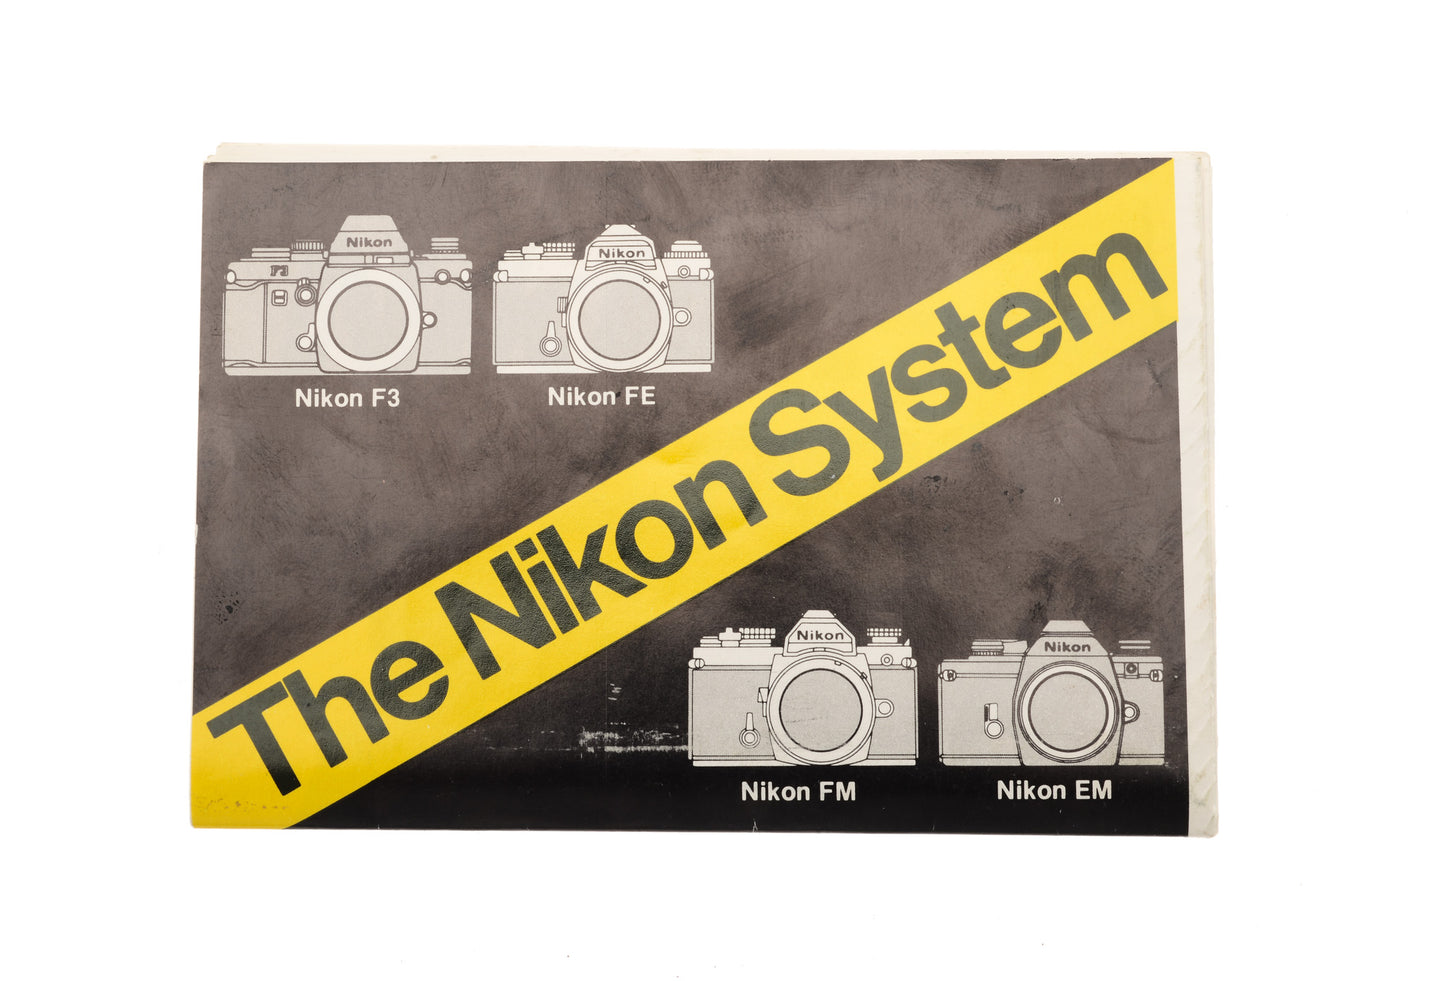 Nikon "The Nikon System" Booklet